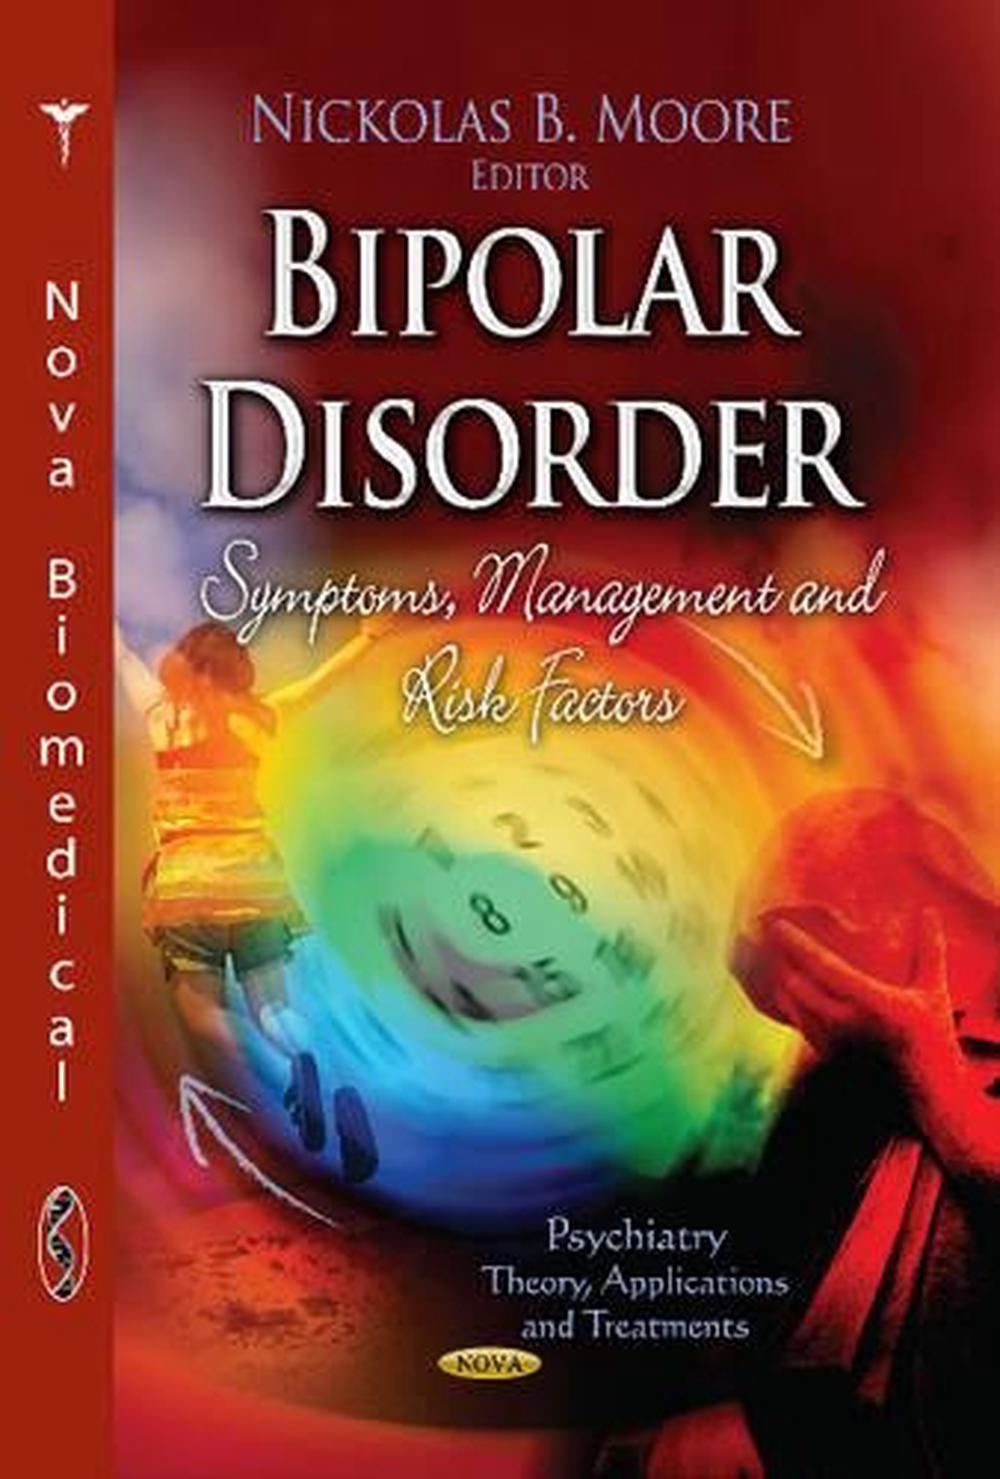 research on bipolar disorder